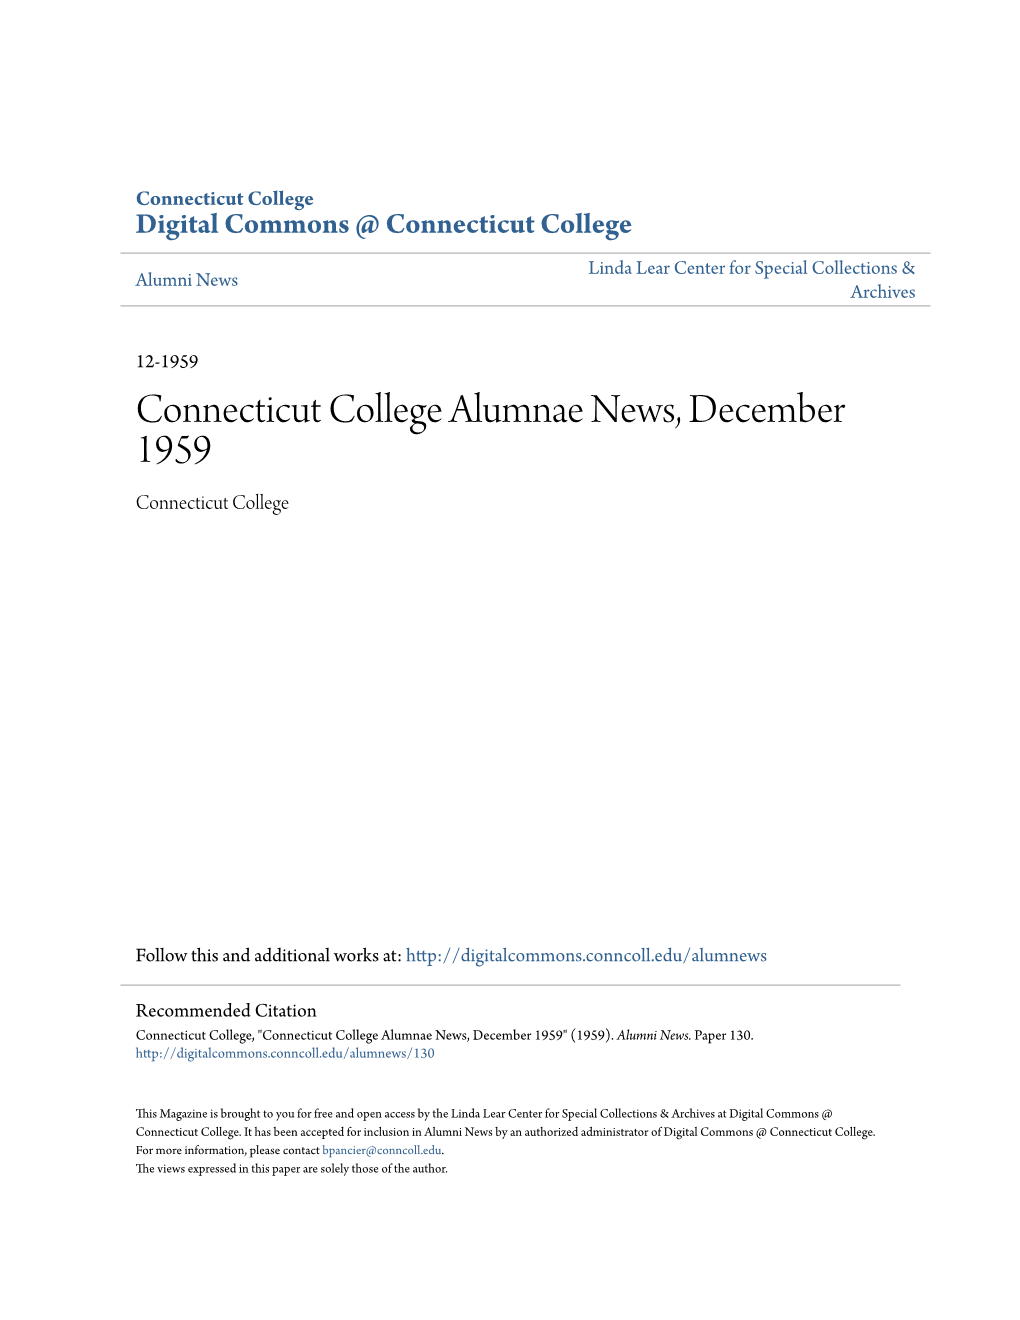 Connecticut College Alumnae News, December 1959 Connecticut College